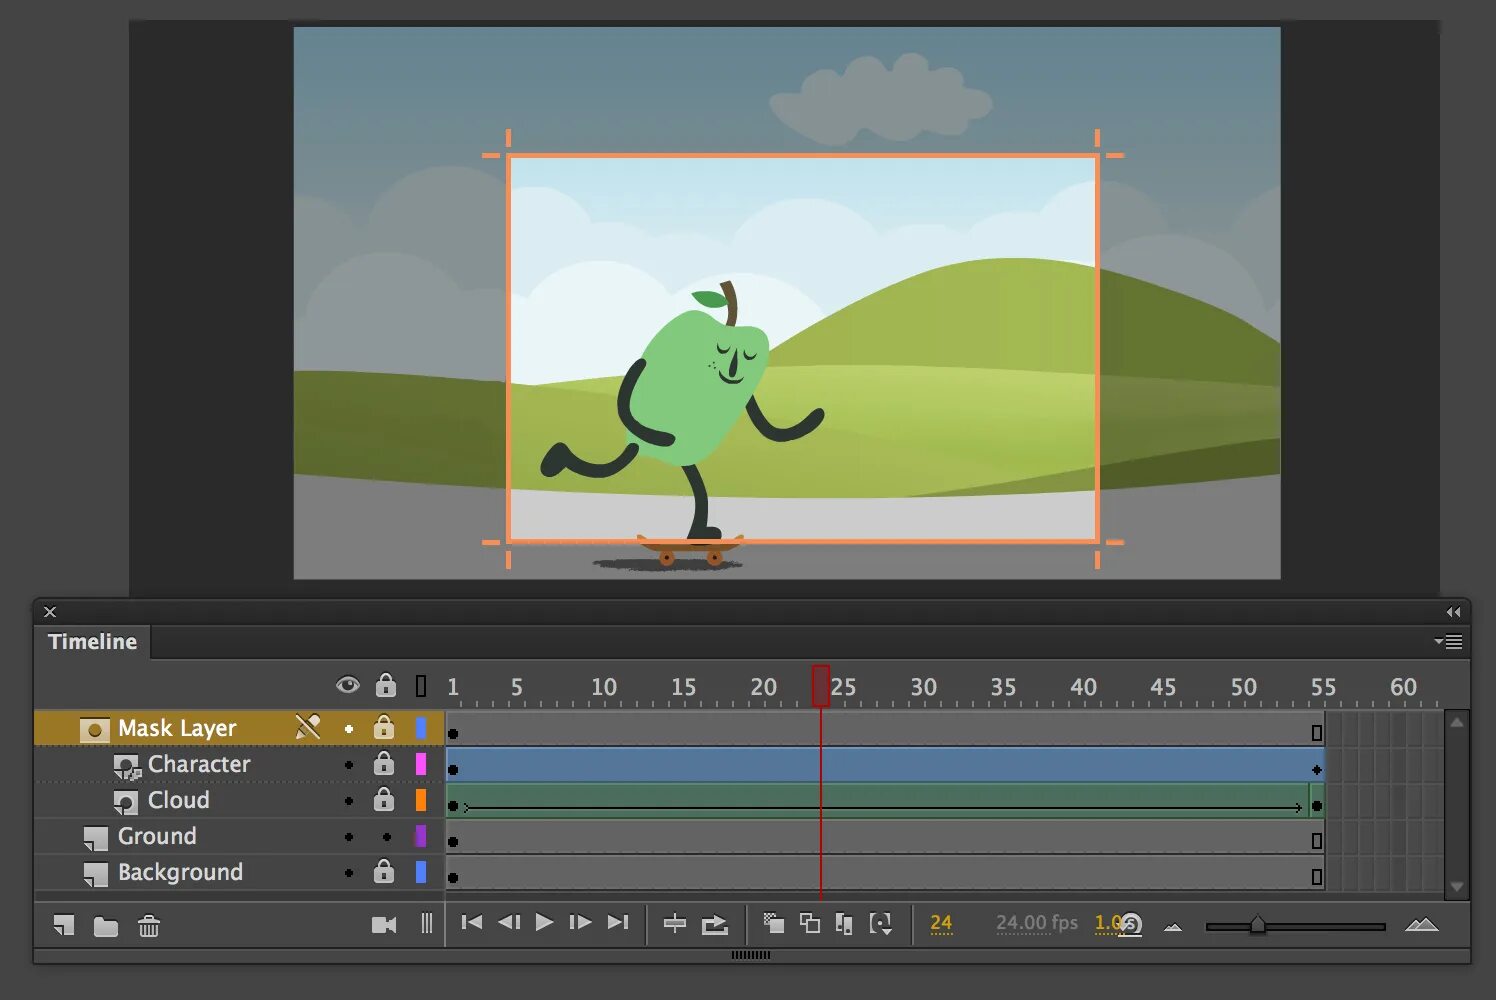 Adobe animate. Adobe animate Интерфейс. Адоб для мультипликации. Adobe анимация. Адопт анимейт